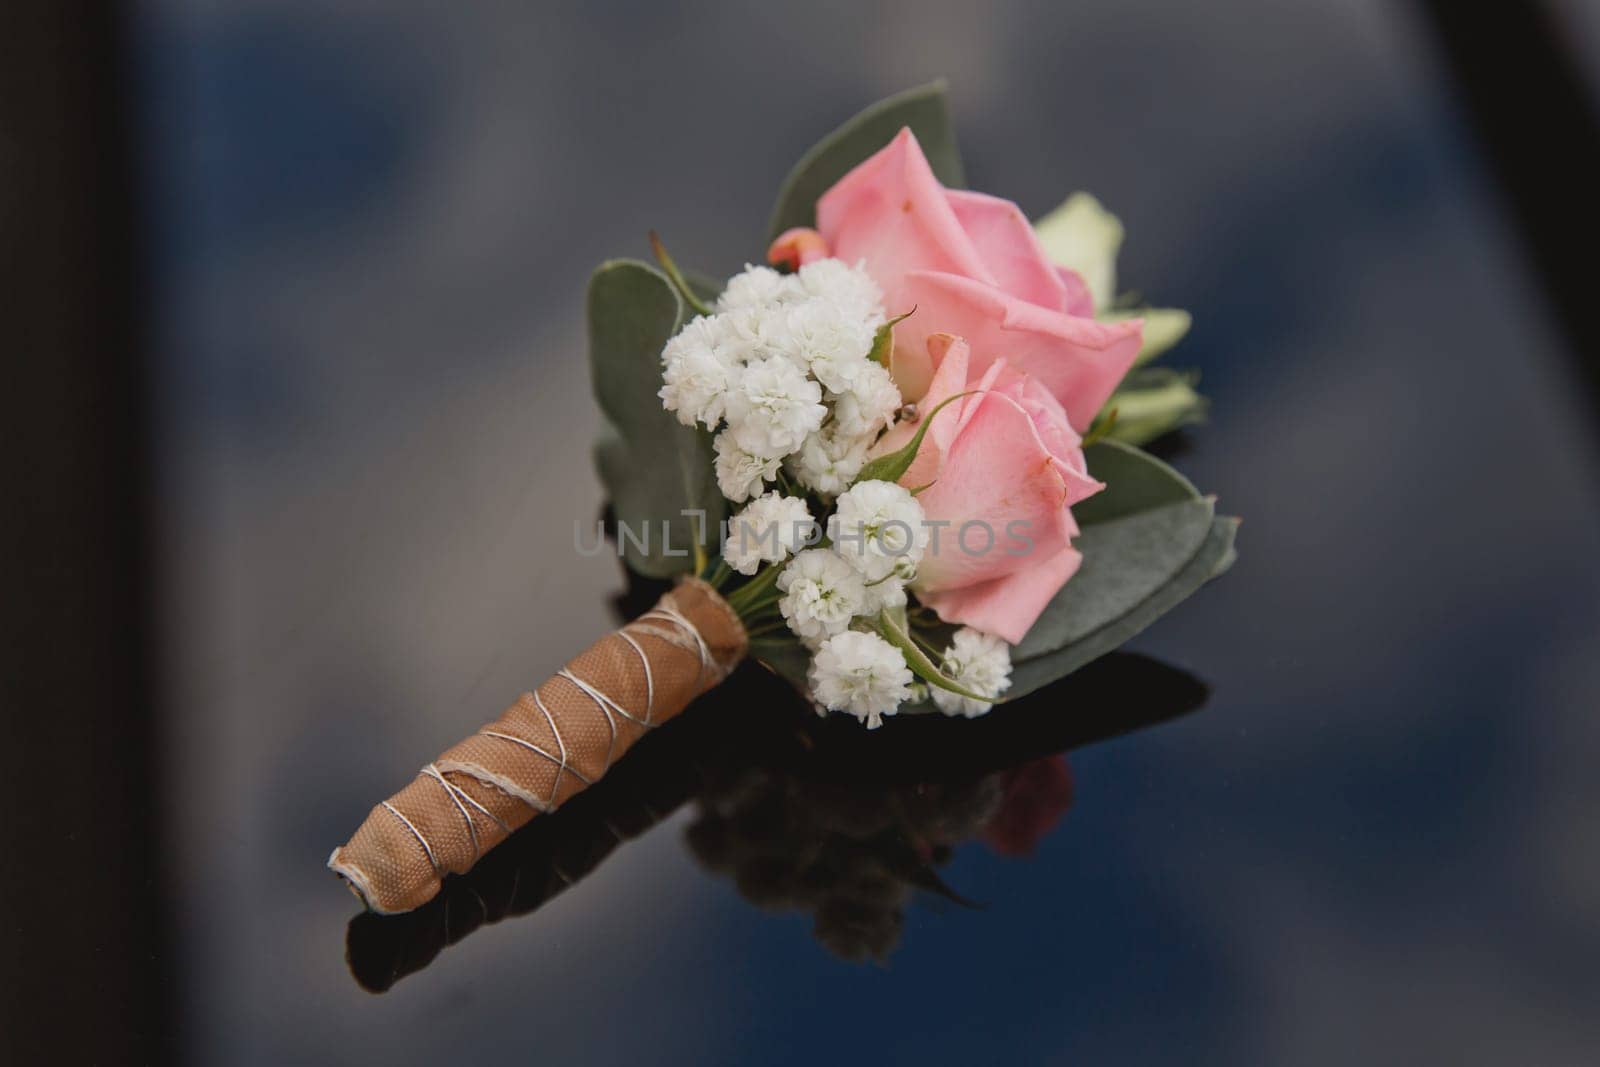 Elegant wedding boutonniere with fresh flowers. Soft focus.